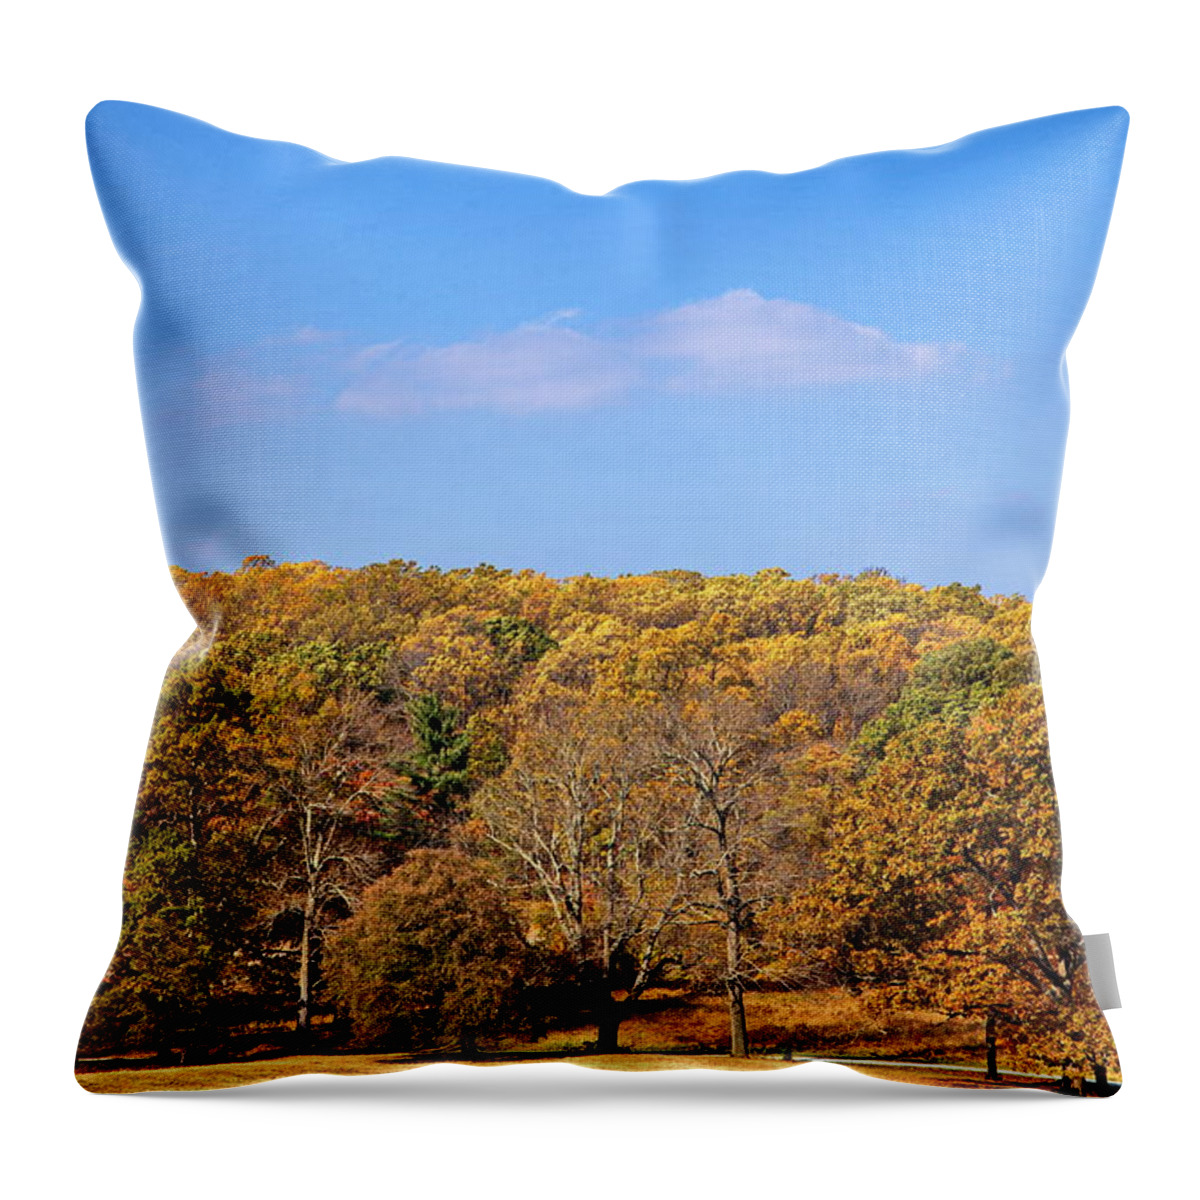 Autumn Throw Pillow featuring the digital art Mixed Fall by Leeon Photo